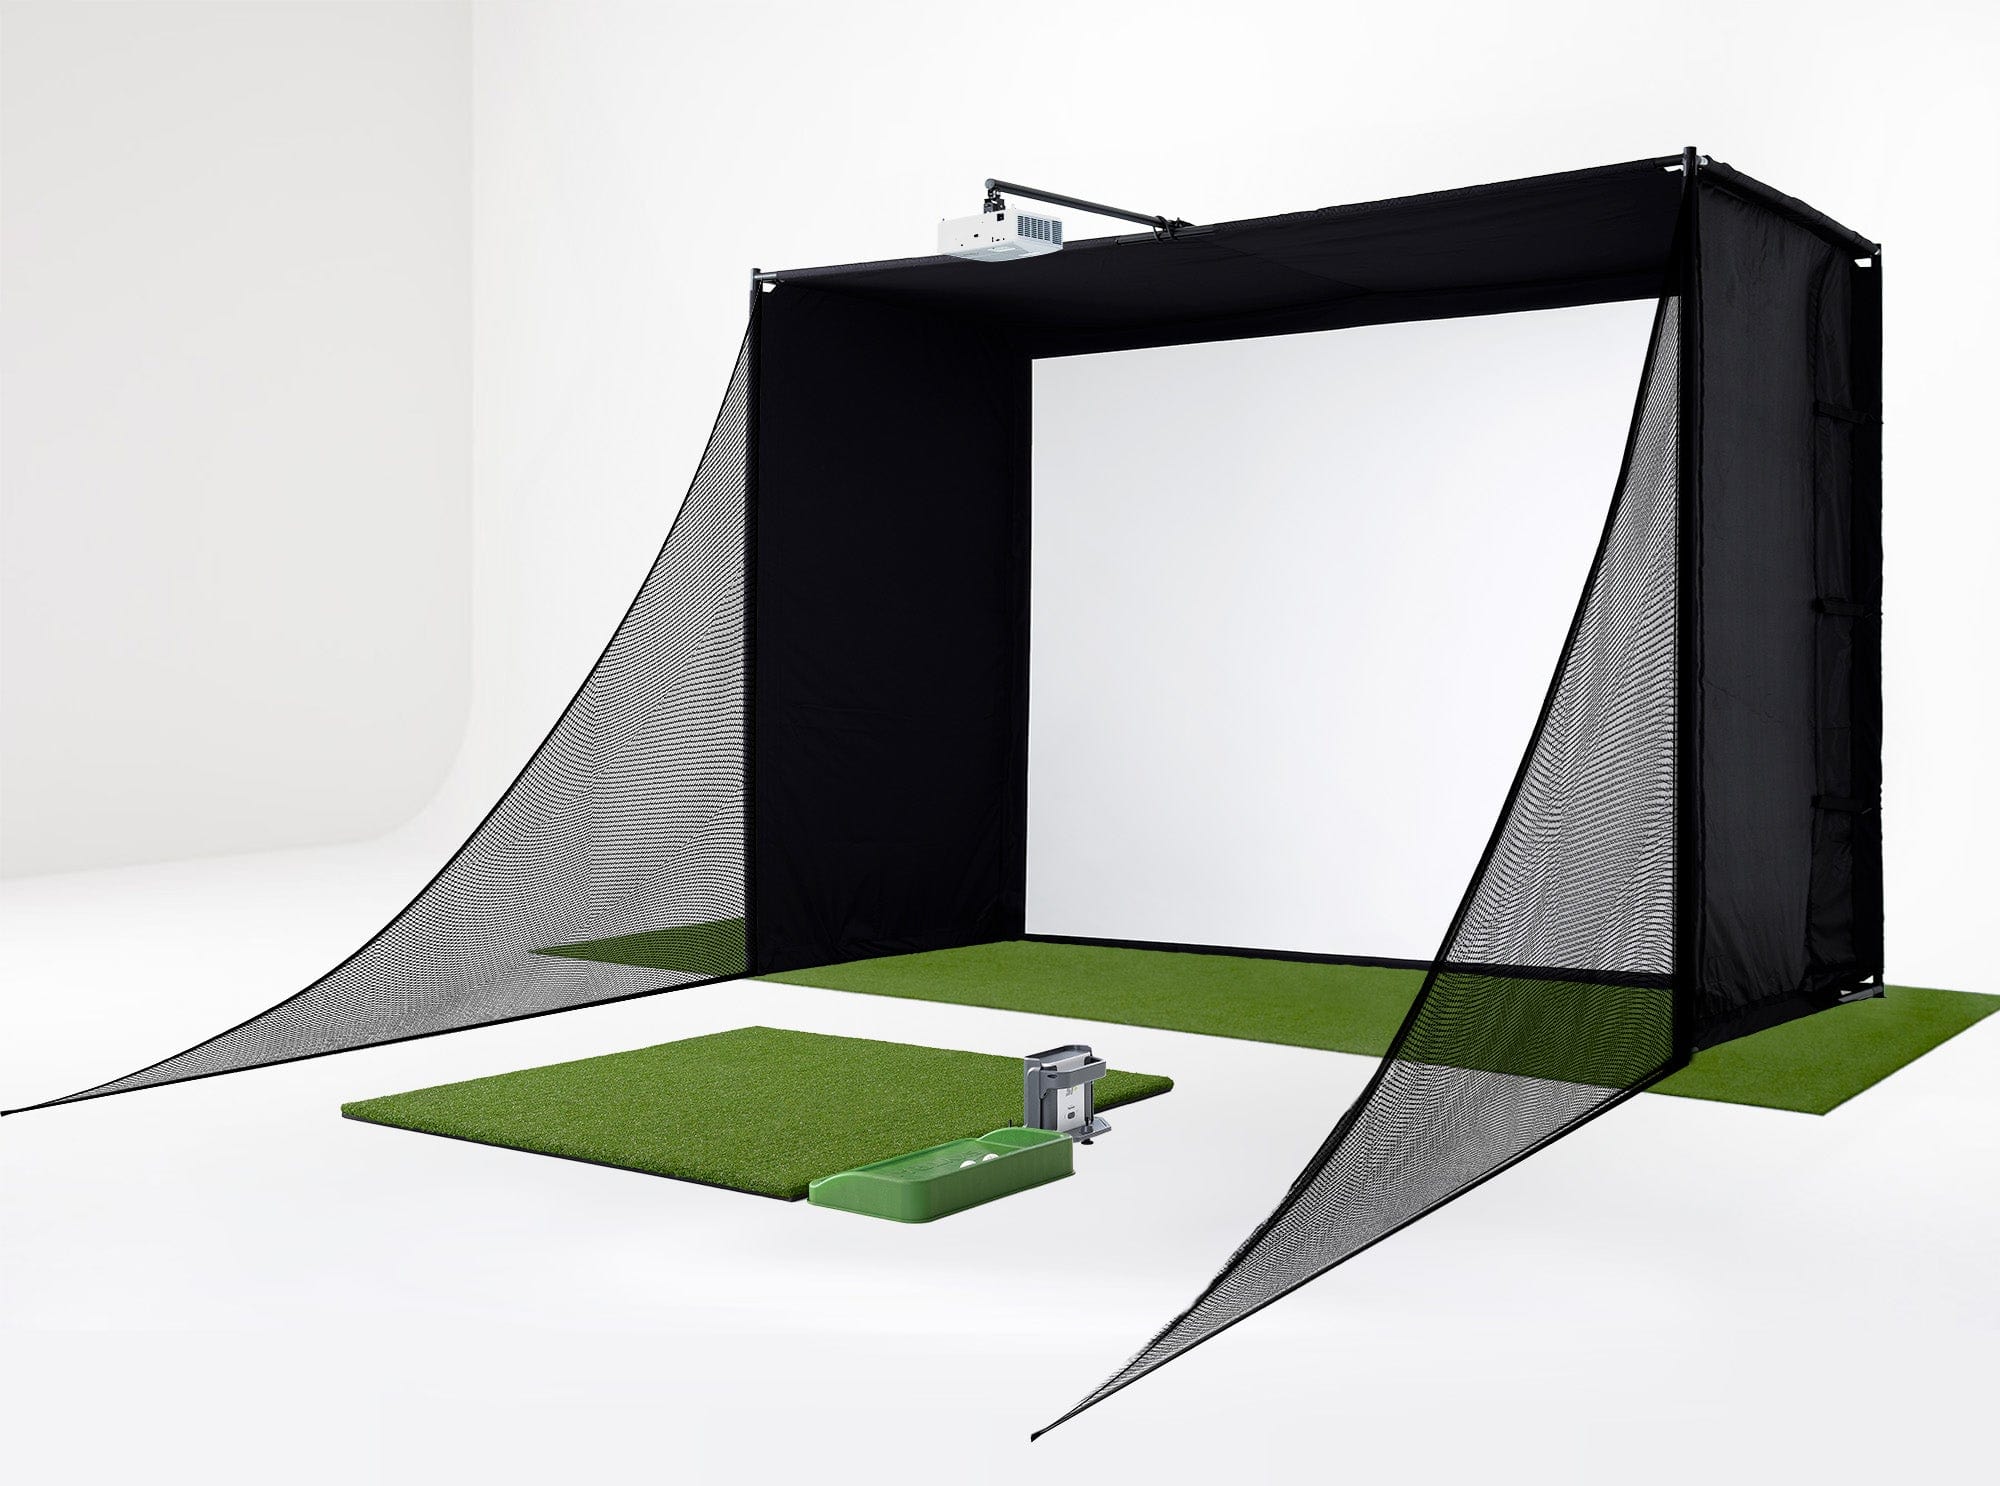 SKYTRAK+ Golf Simulator Studio Pro